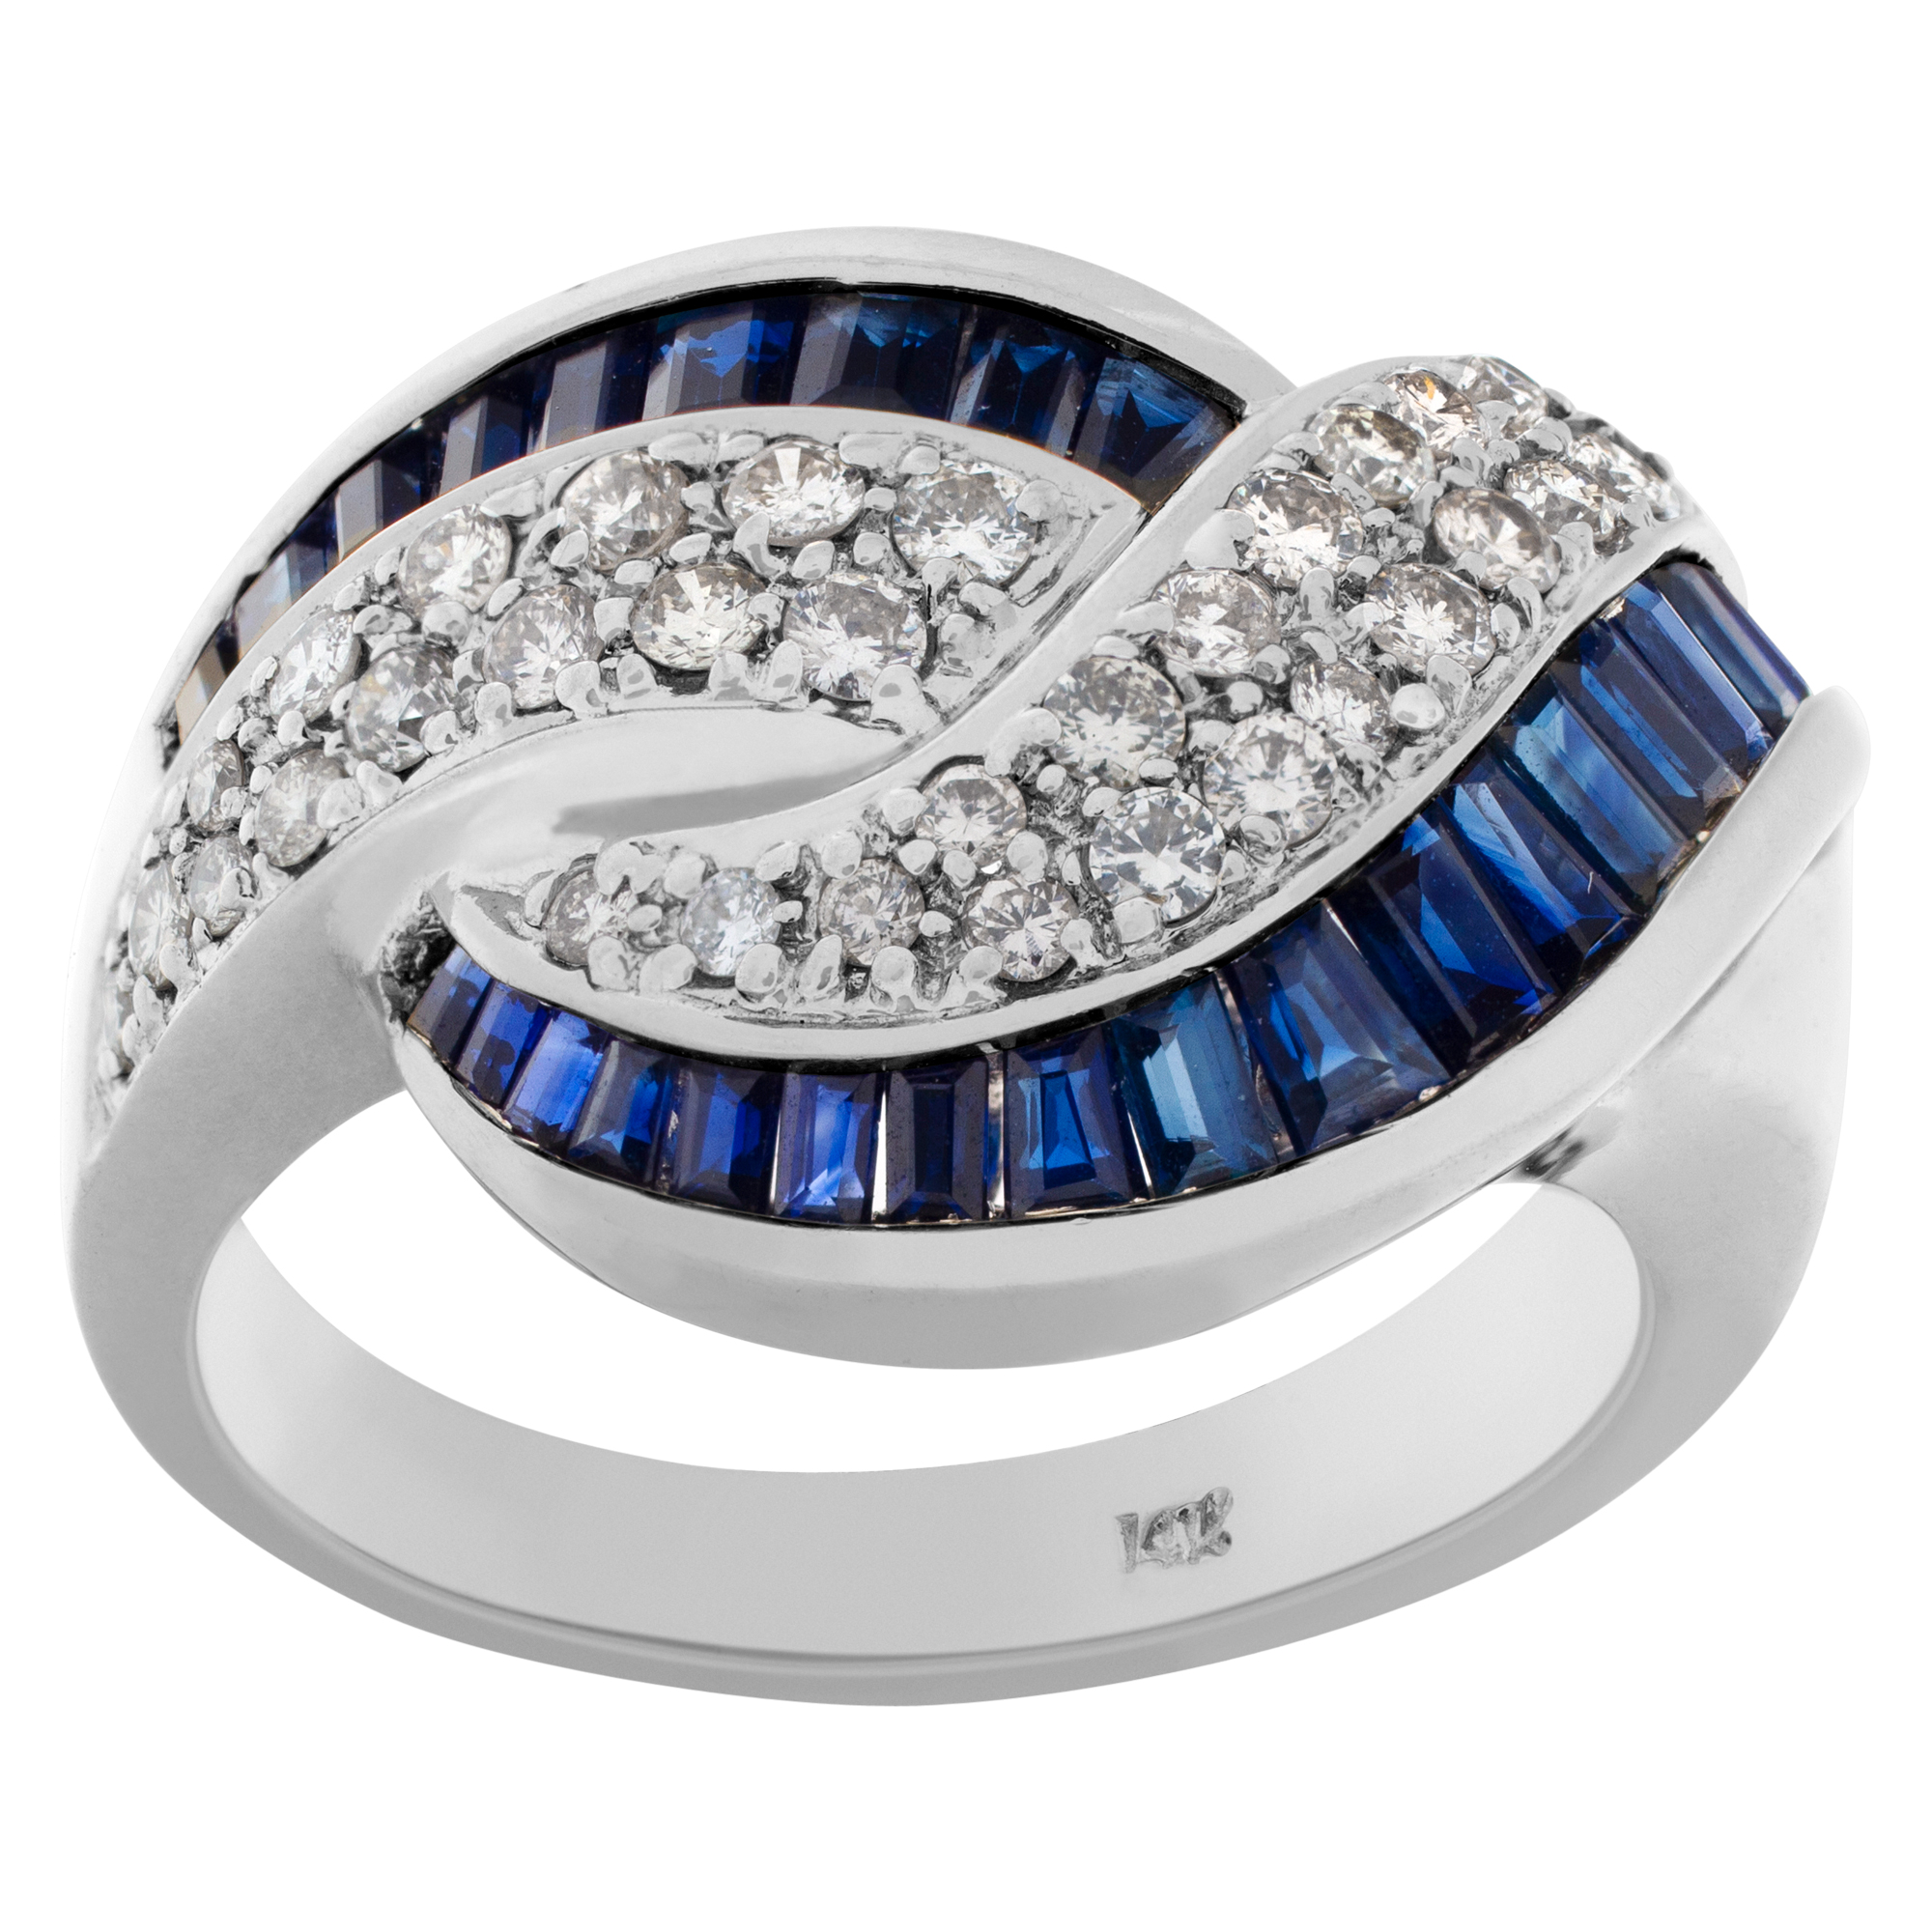 Criss-Cross sapphire & diamond ring in 14K white gold. Approx 1 carat tapered emerald cut sapphire and 0.75 carat full cut round diamond.